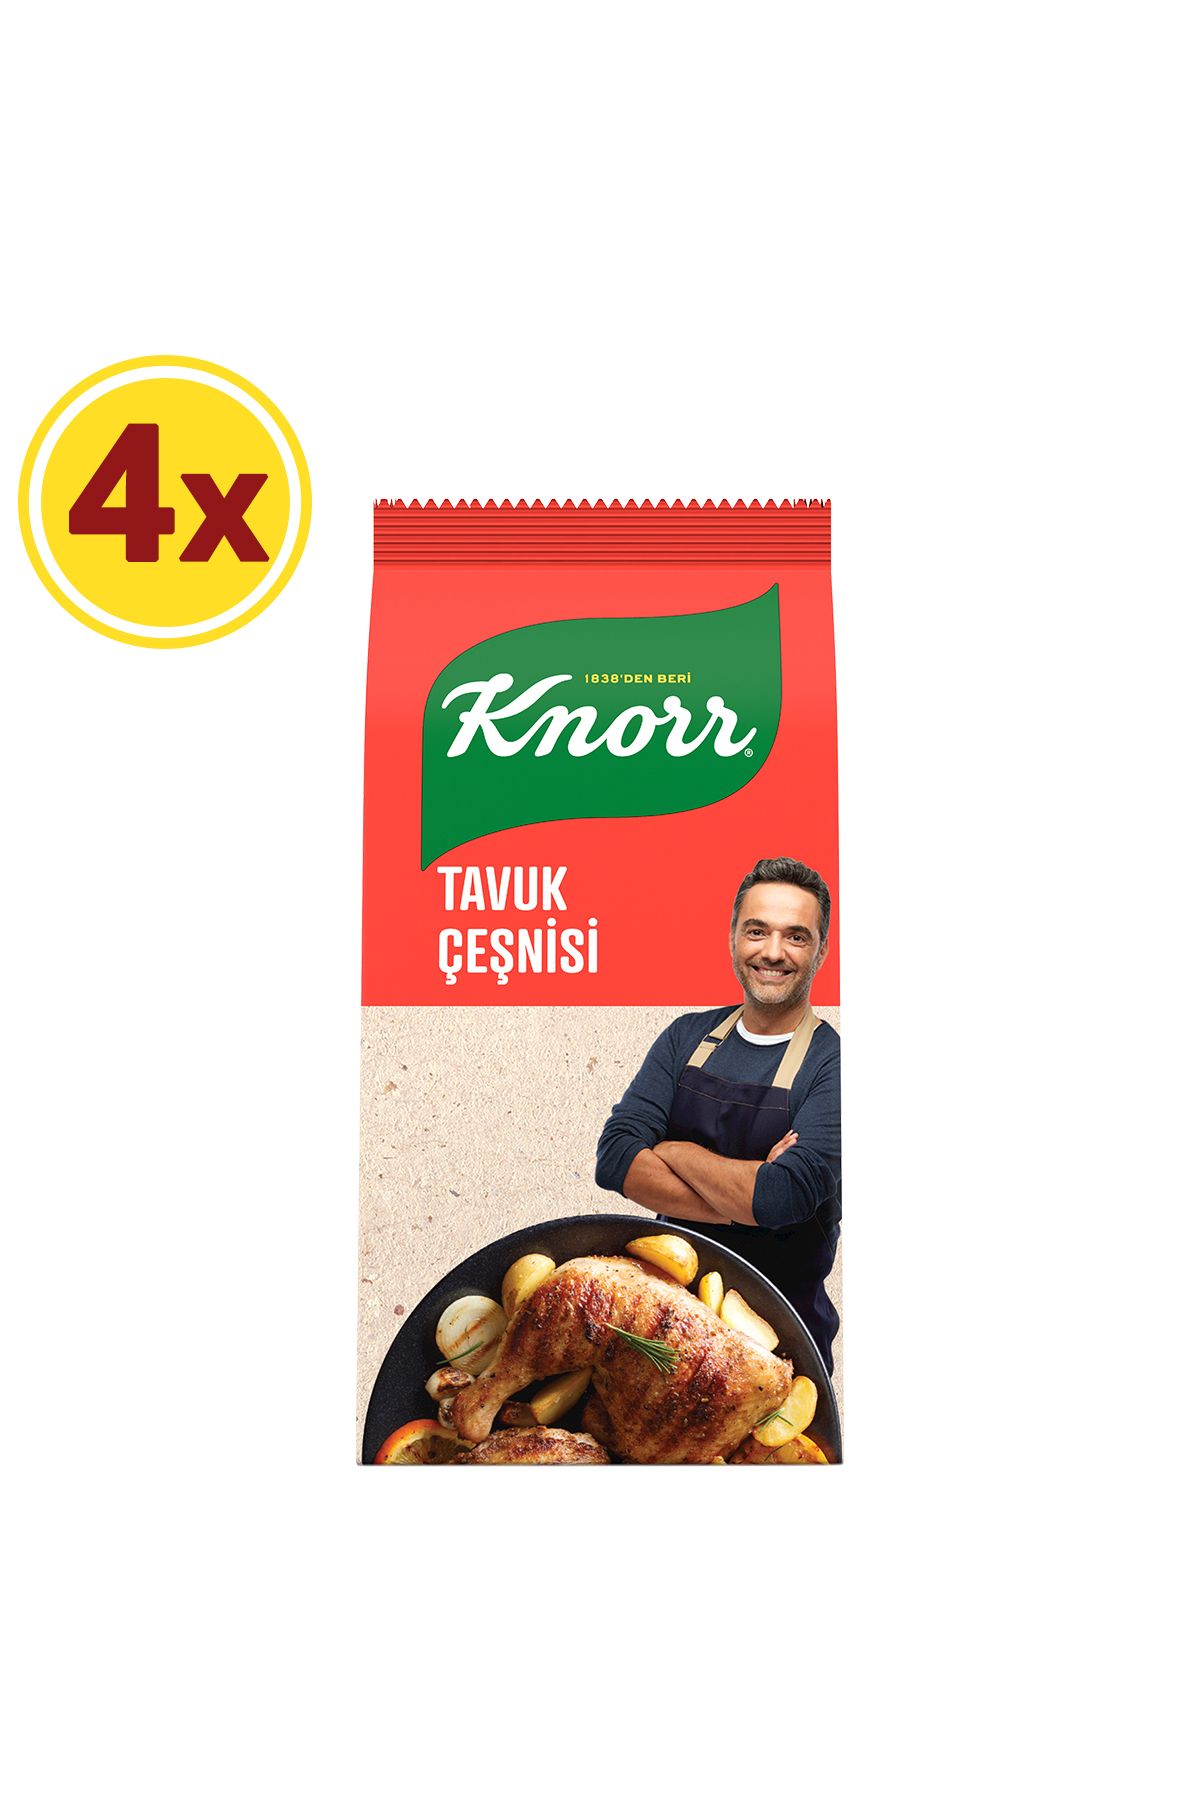 Knorr Tavuk Cesnısı 4x60g